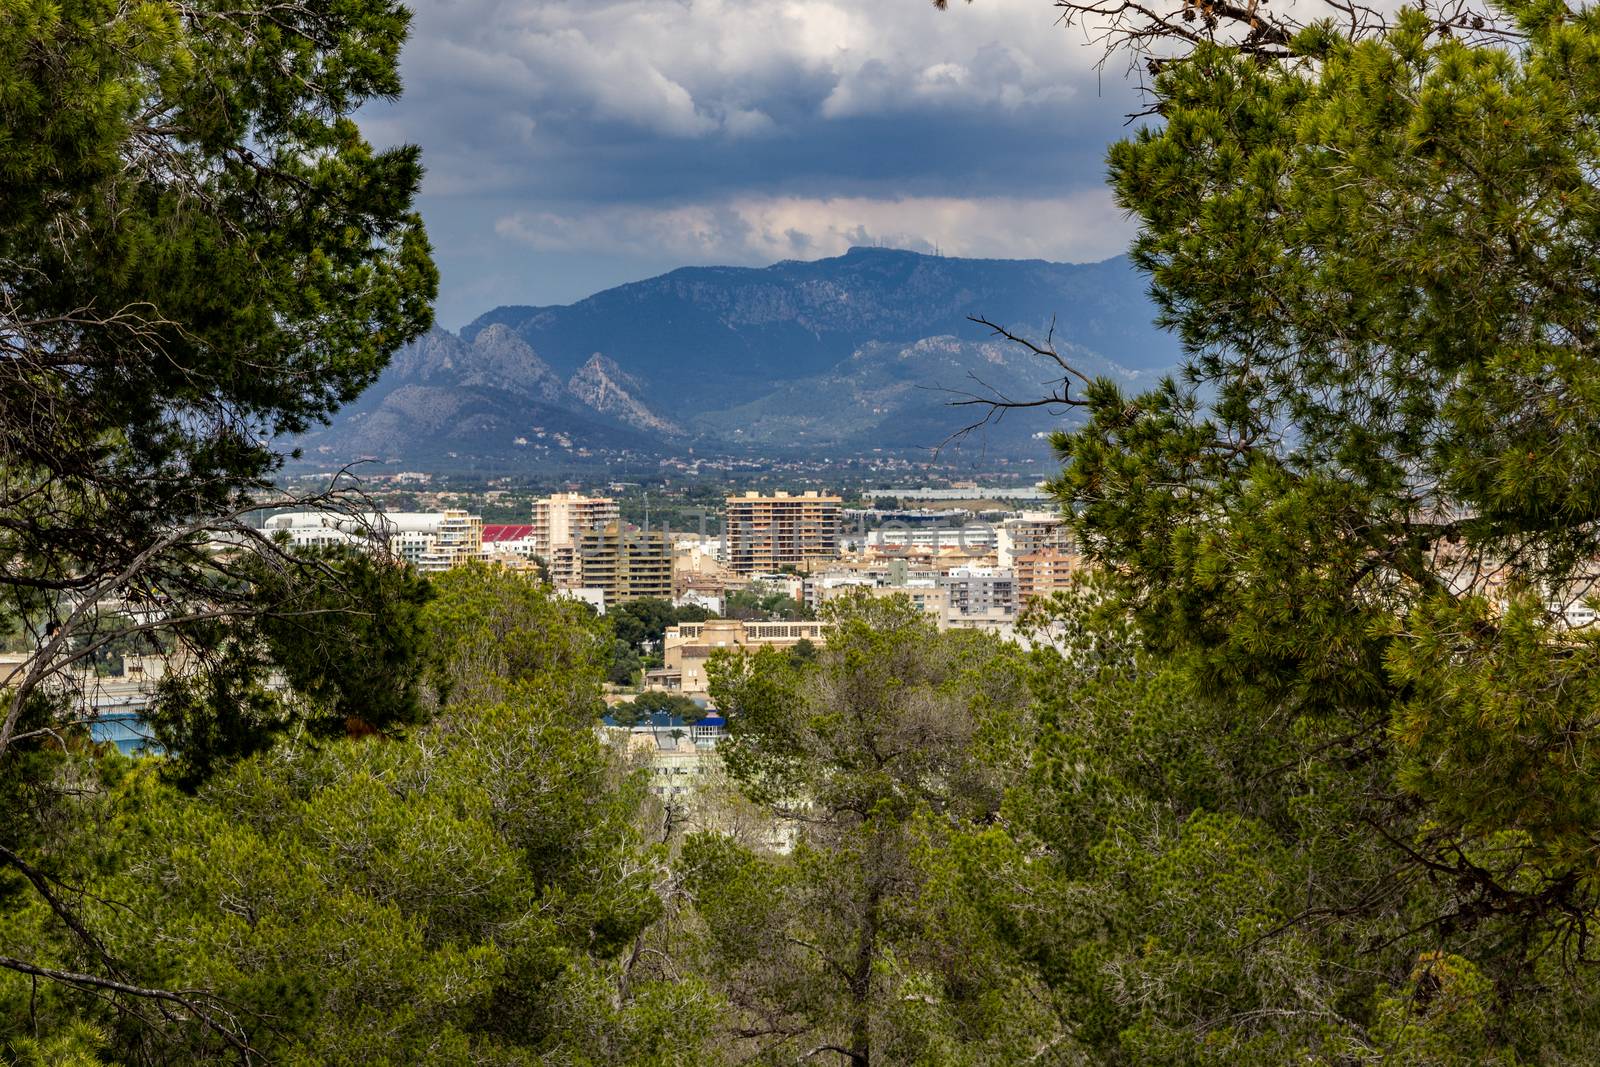 Scenic view at Palma de Mallorca, Spain by reinerc